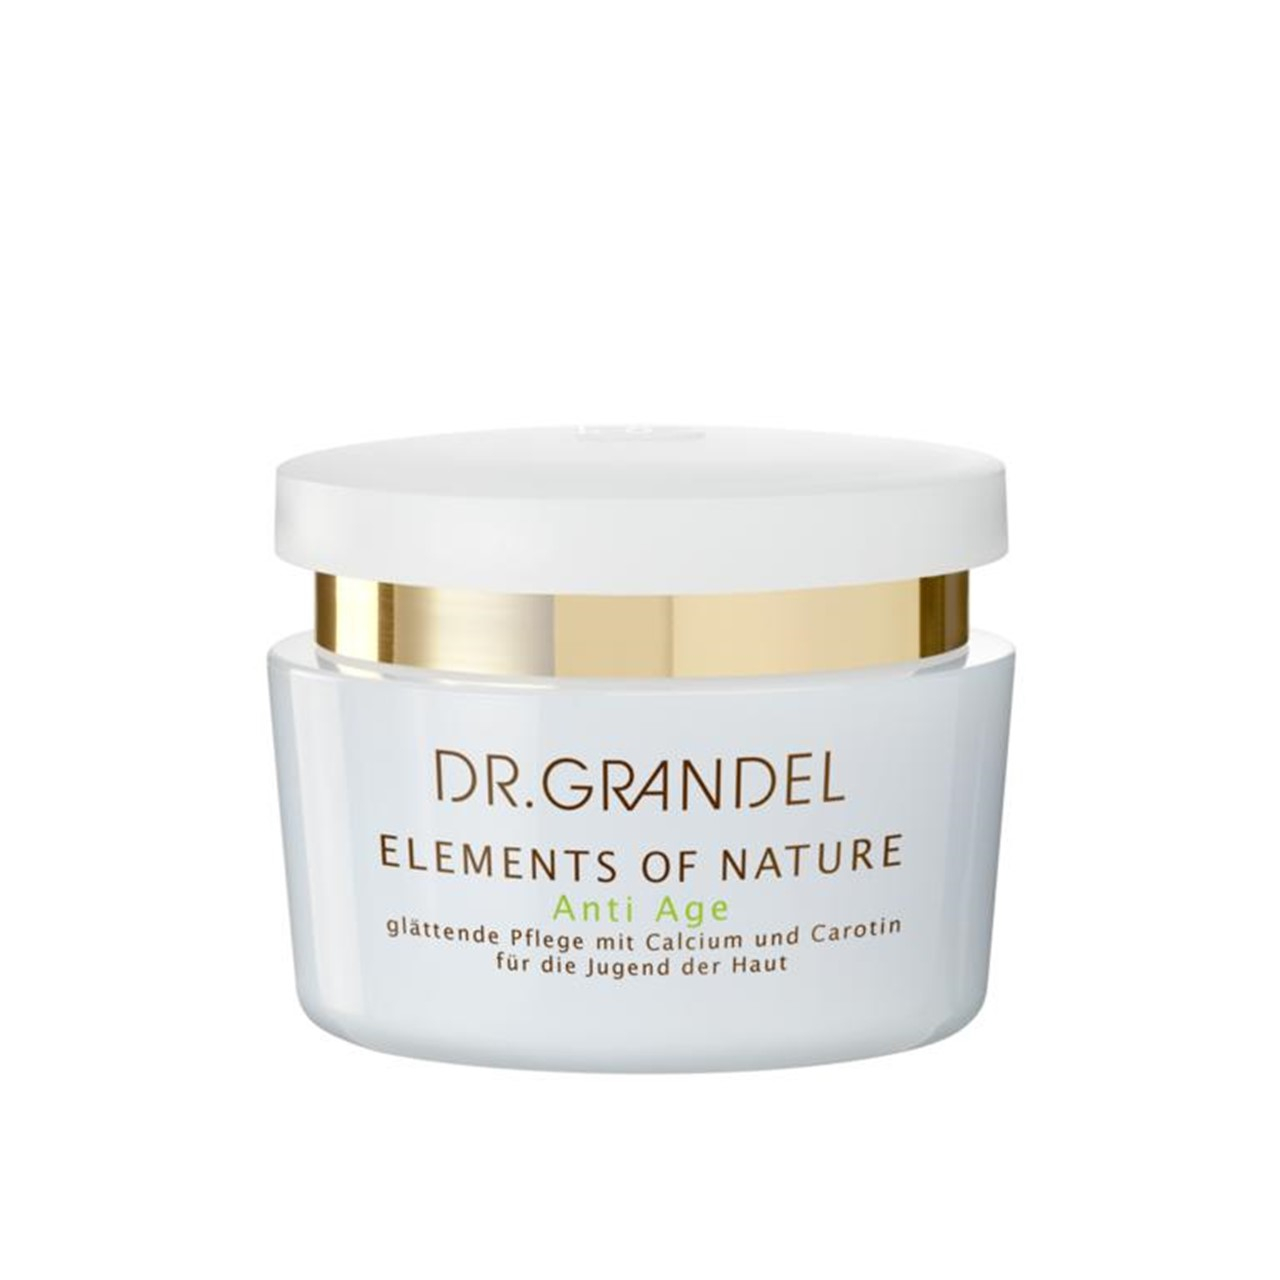 DR. GRANDEL Elements Of Nature Anti Age Cream 50ml (1.69fl oz)